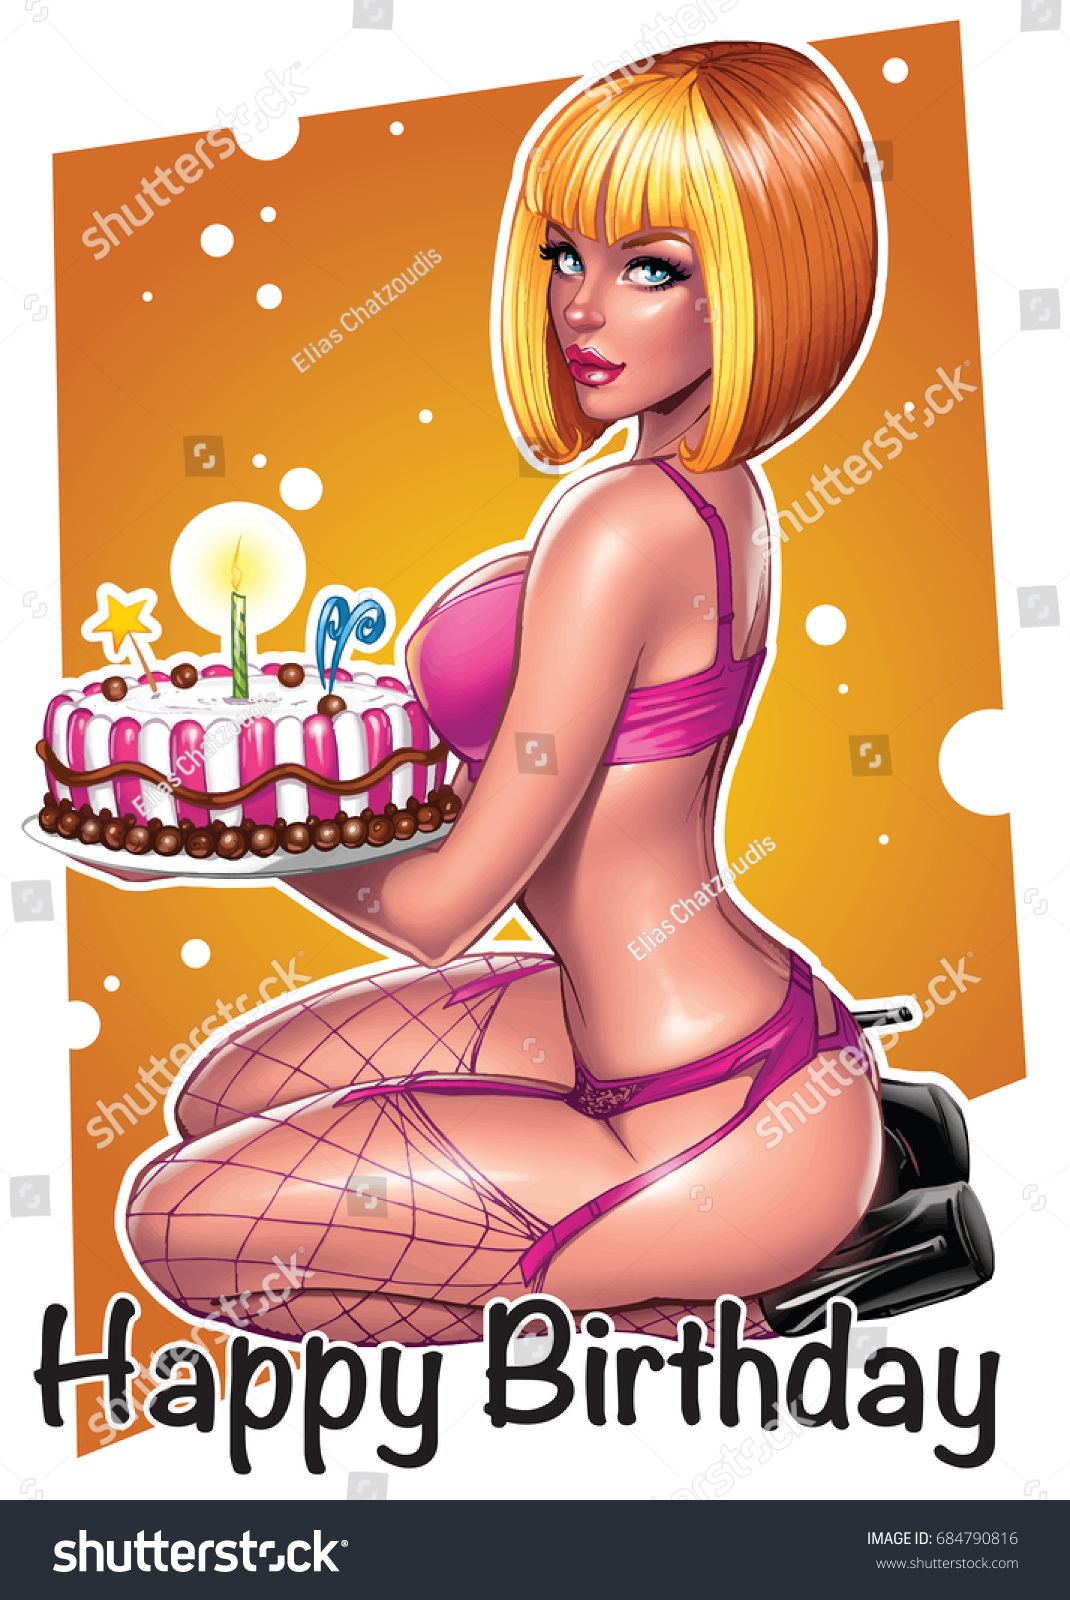 Sexy Pinup Girl Holding Birthday Cake: стоковая векторная графика (без лице...